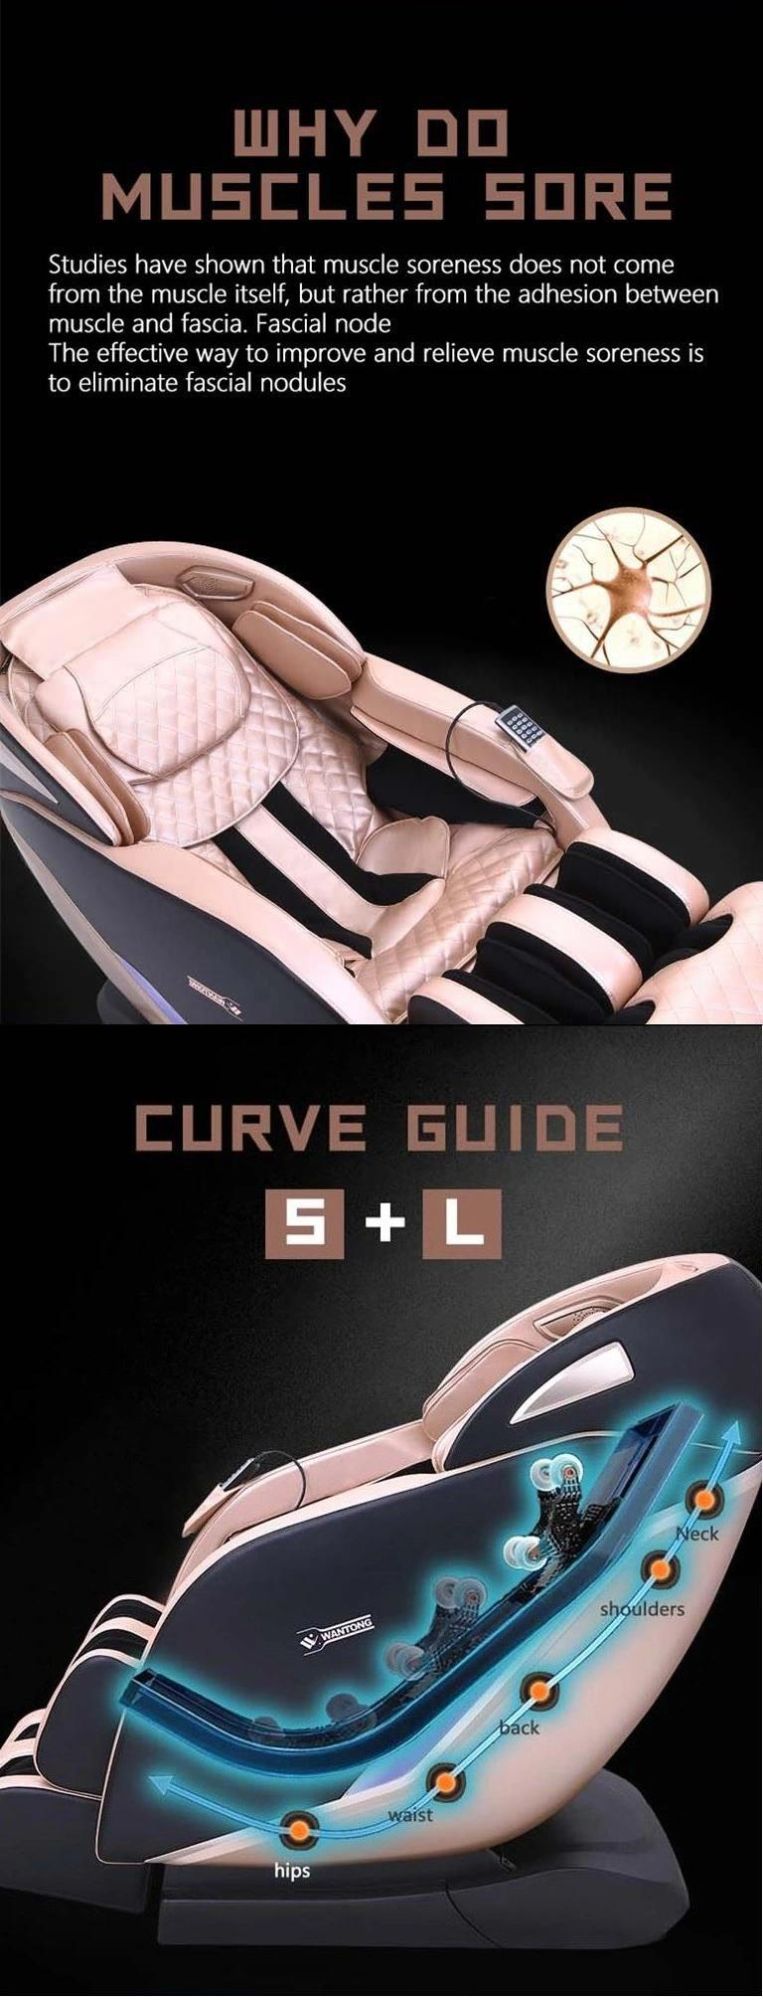 Modern Luxury Foot Full Body 3D Hand Electric Ai Smart Recliner SL Track Zero Gravity Shiatsu 4D Massage Chair for Home Office